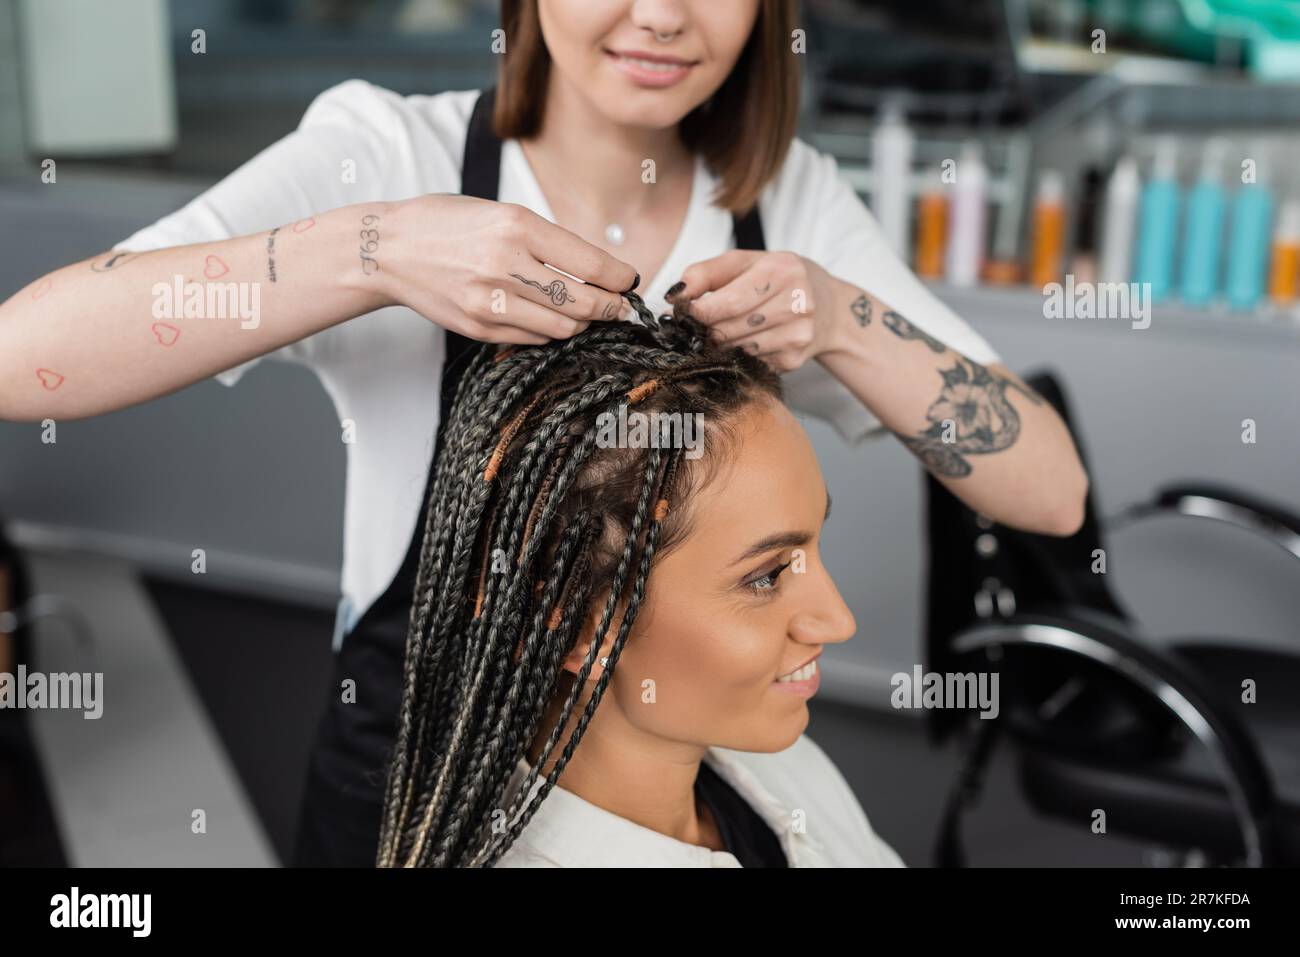 beauty industry, braids, tattooed hairdresser braiding hair of woman in salon, braiding process, salon customer, beauty profession, client satisfactio Stock Photo